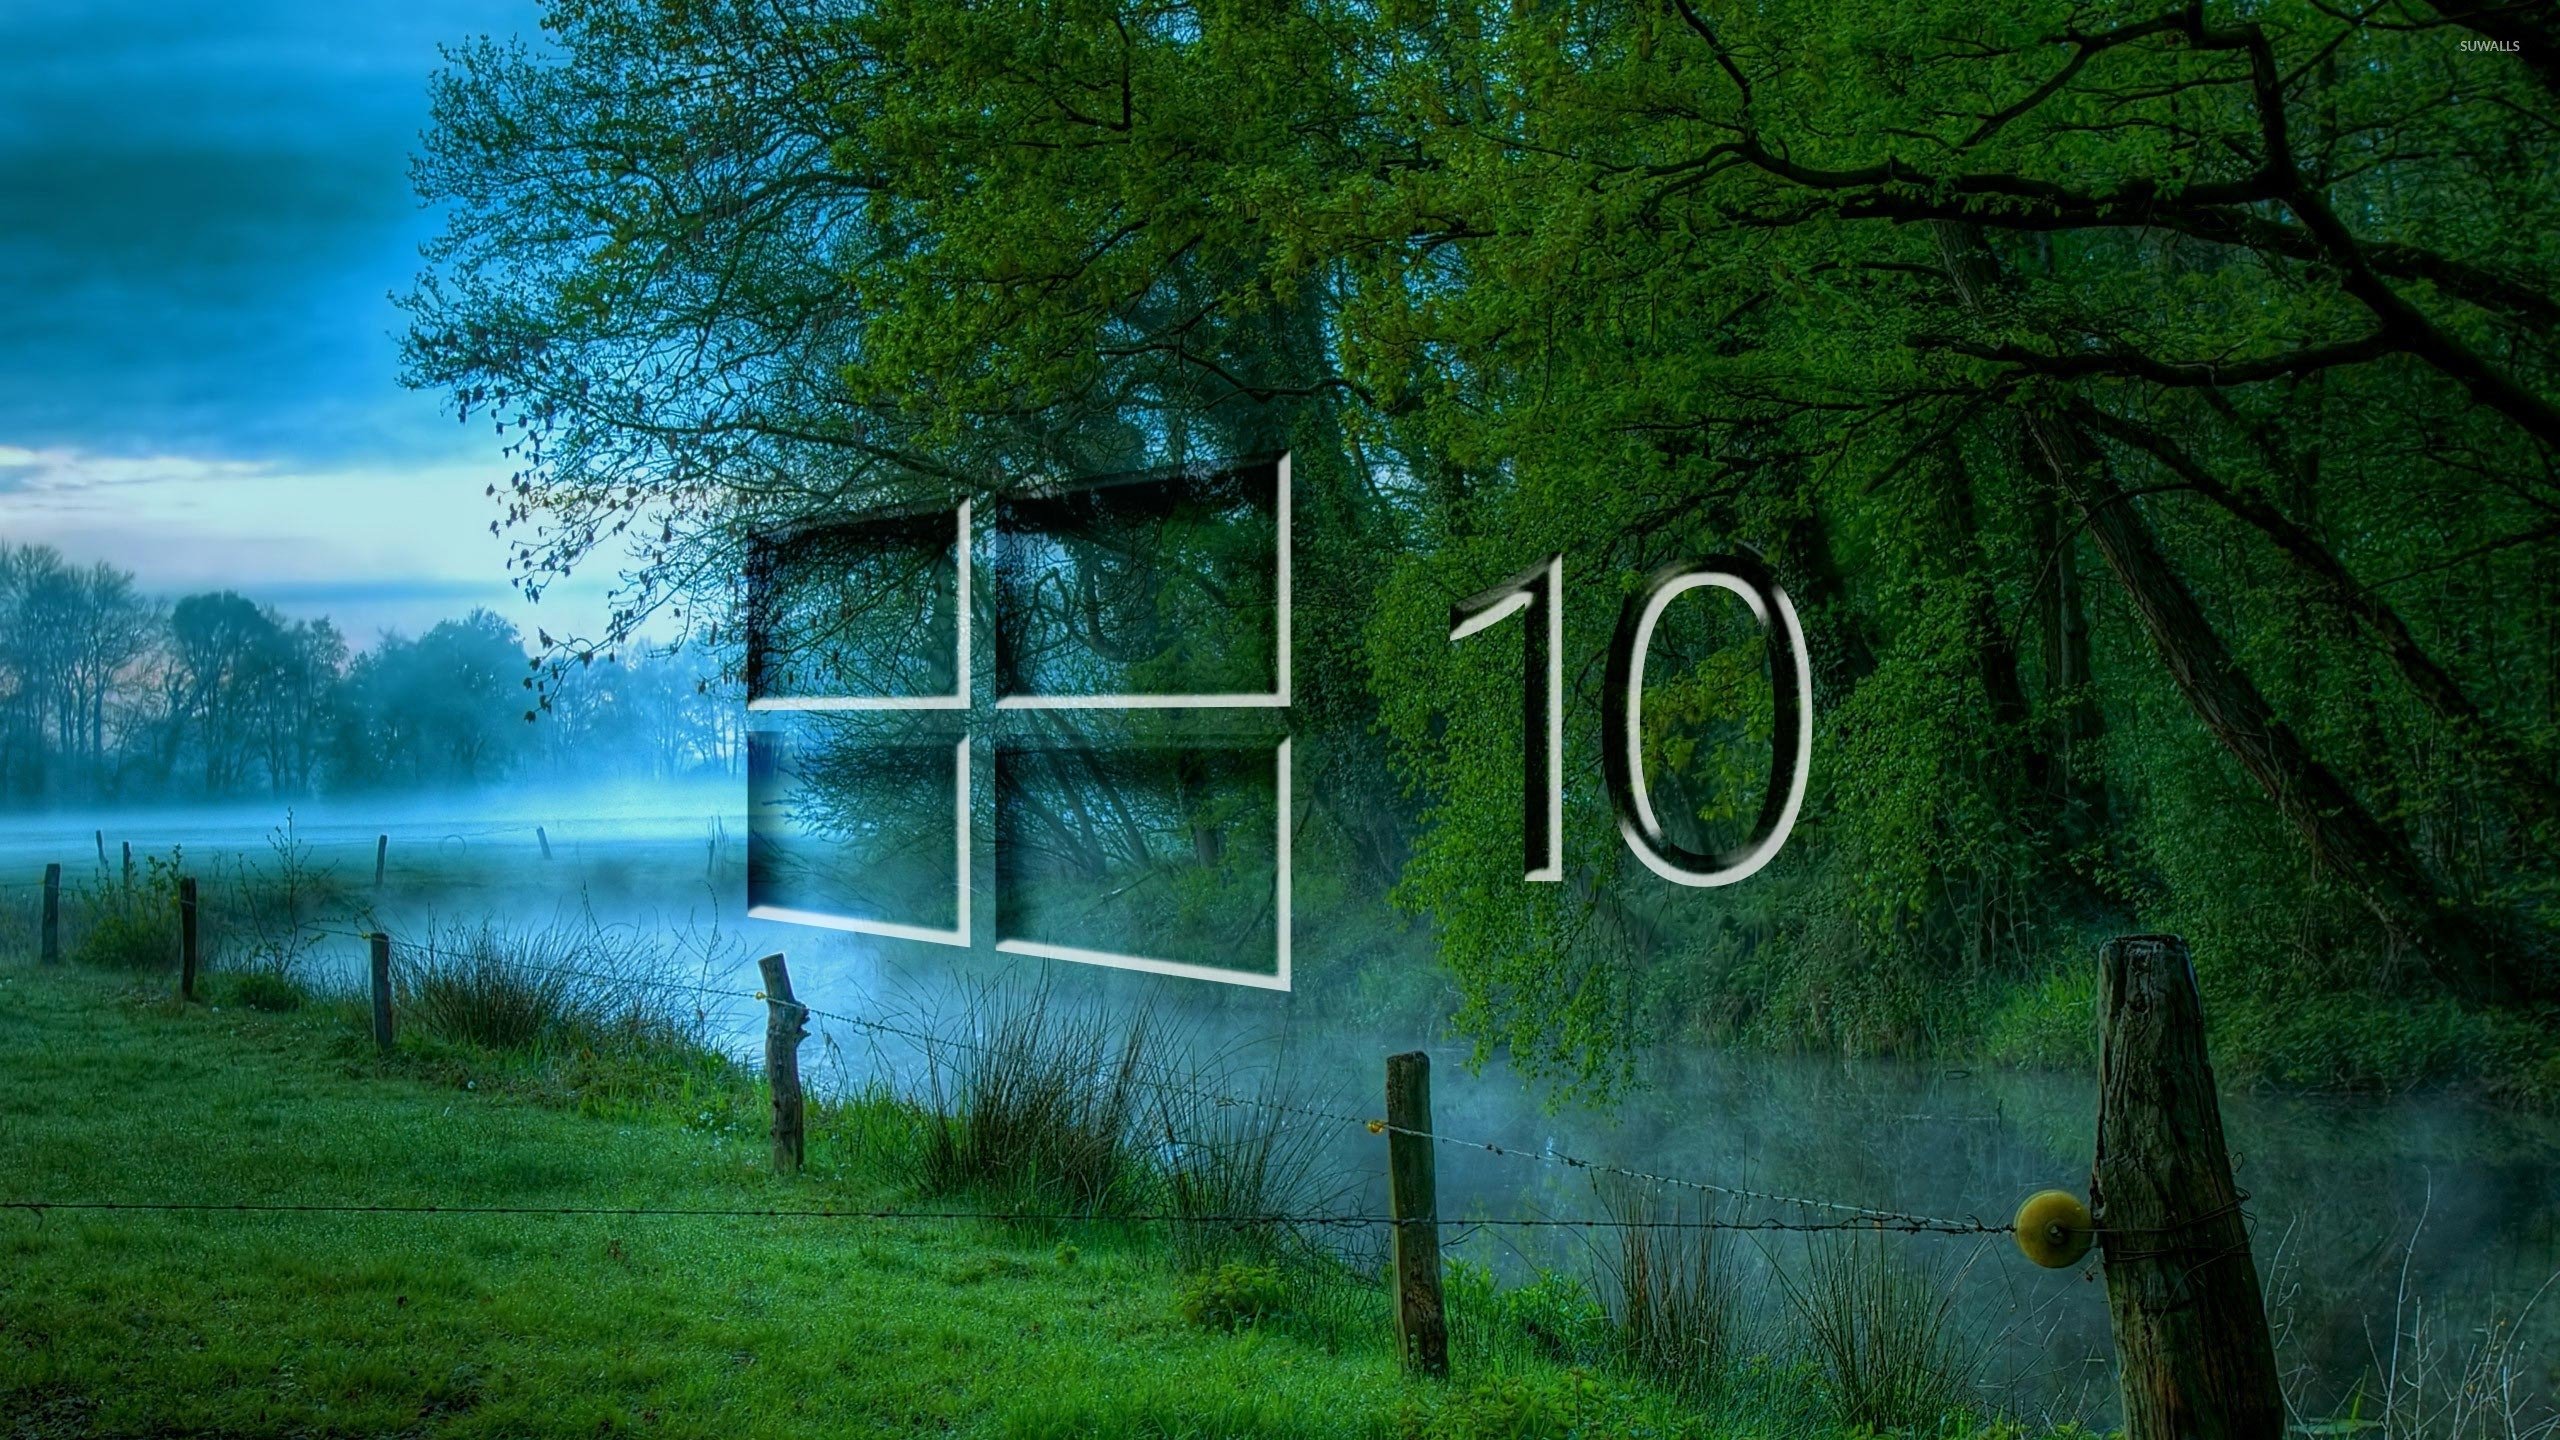 Windows 10 in the misty morning glass logo wallpaper 2560x1440